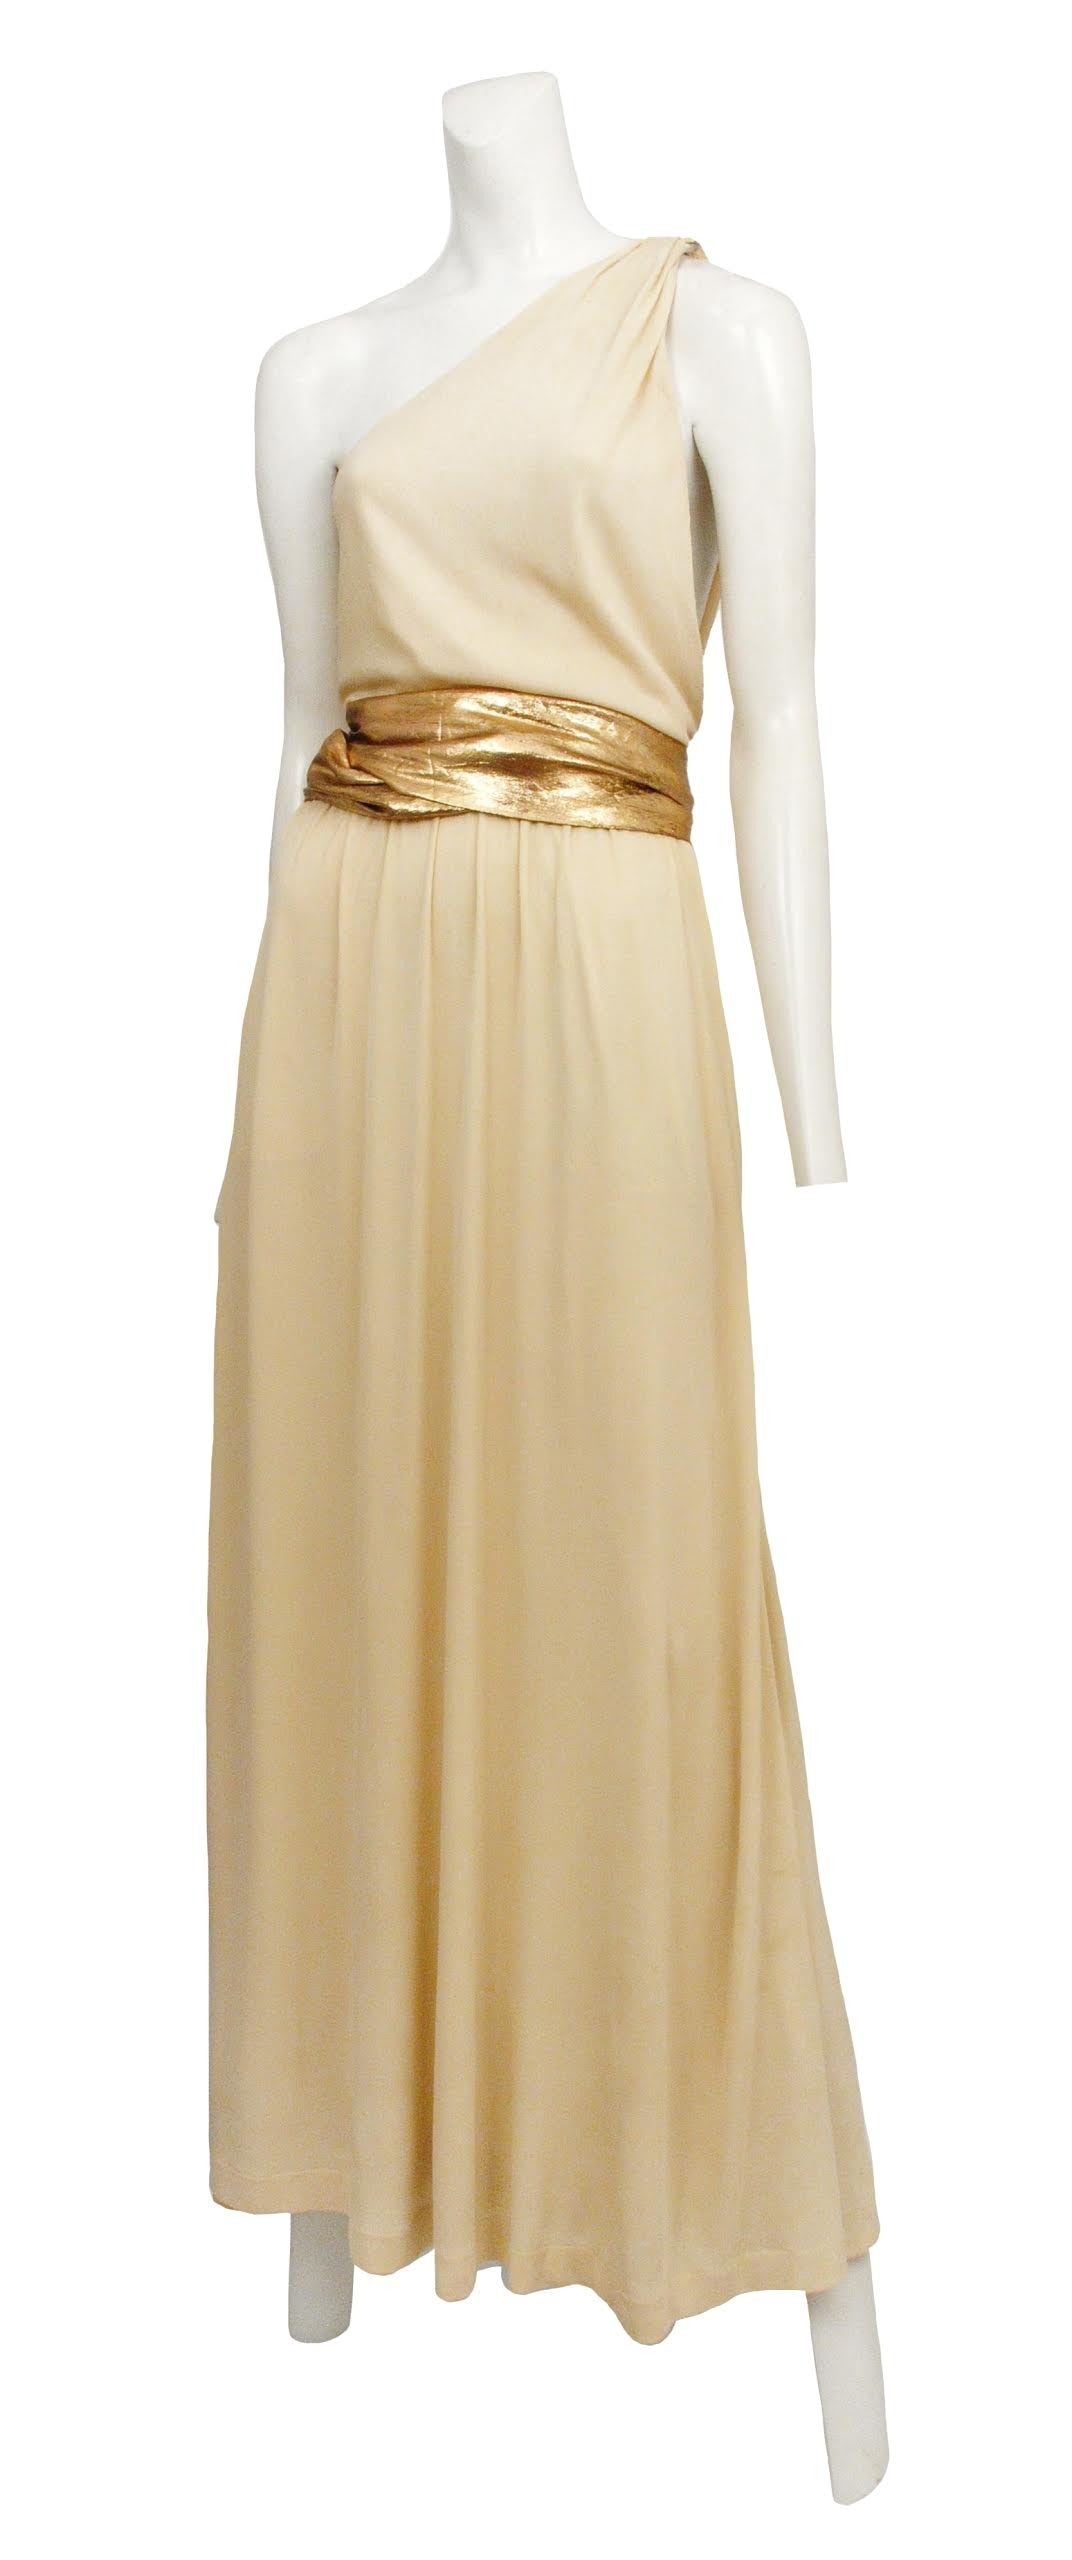 Vintage Saint Laurent Rive Gauche 1970's cream jersey asymmetrical gown with gold lame belt.